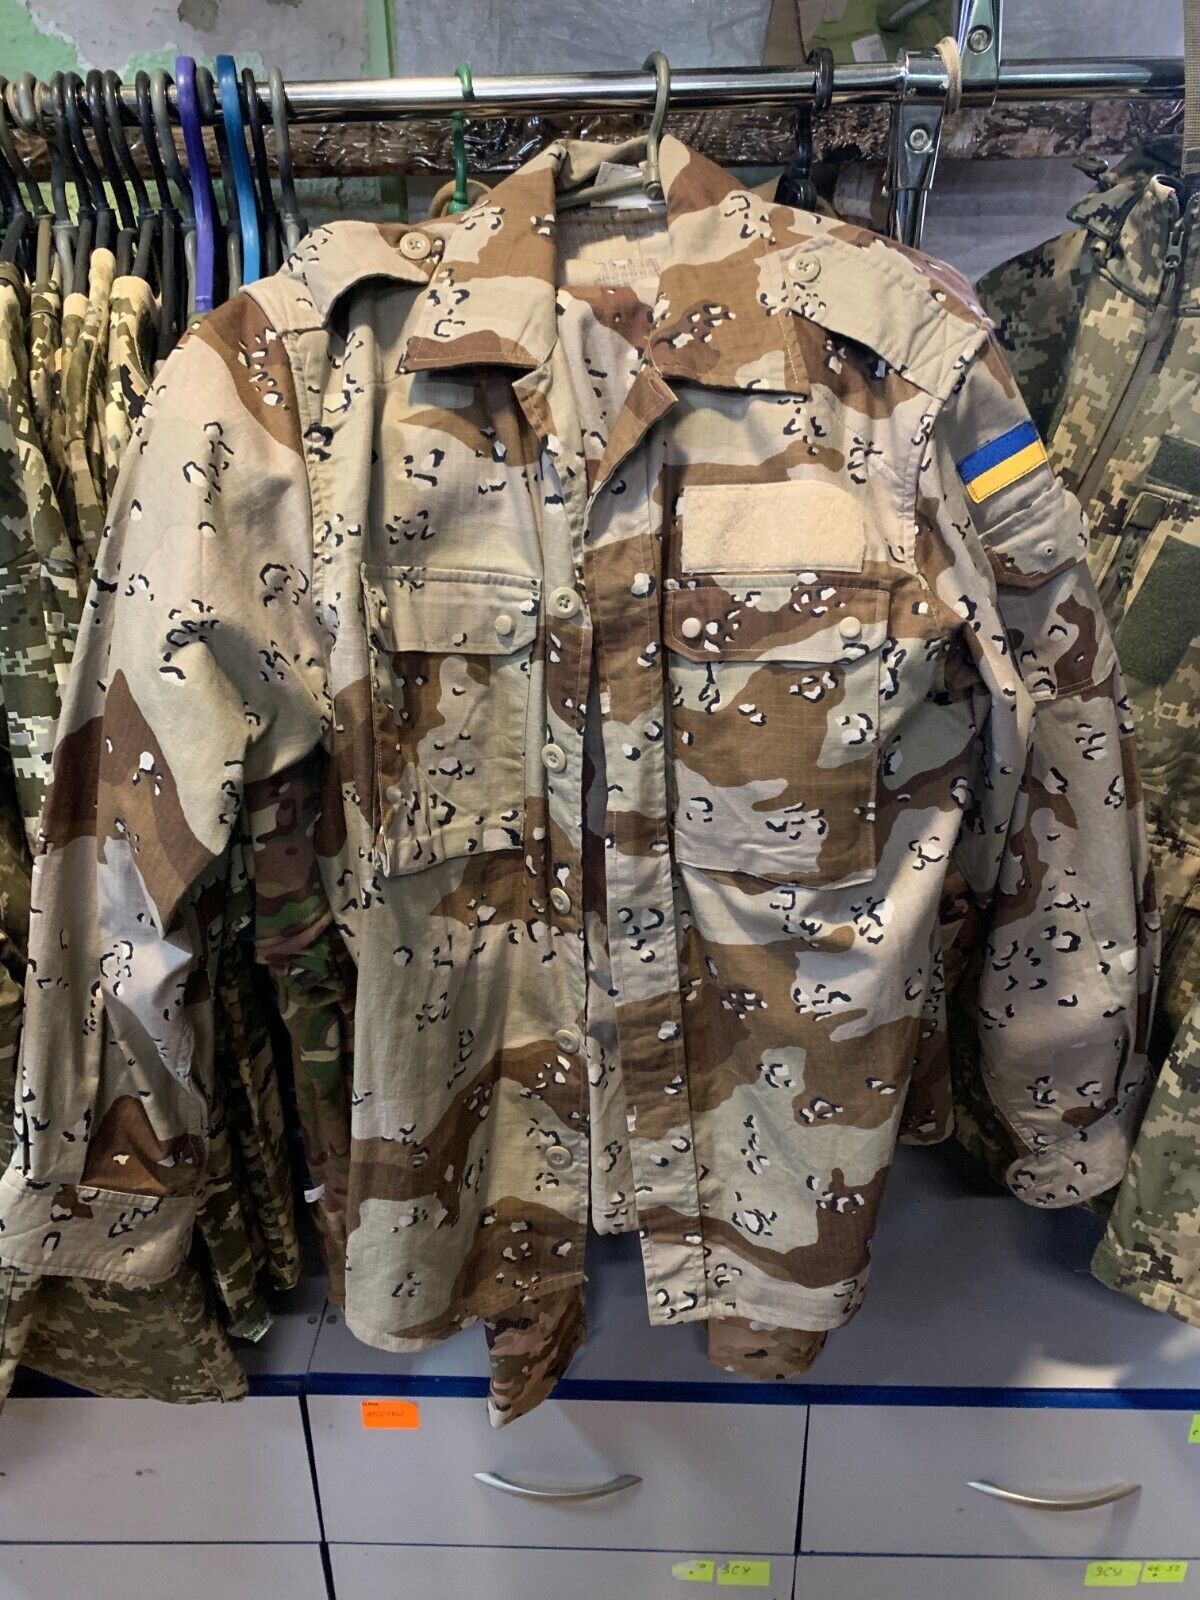 Rare Vintage Ukrainian Peacekeeper Army Uniform - Witness to Service in Iraq